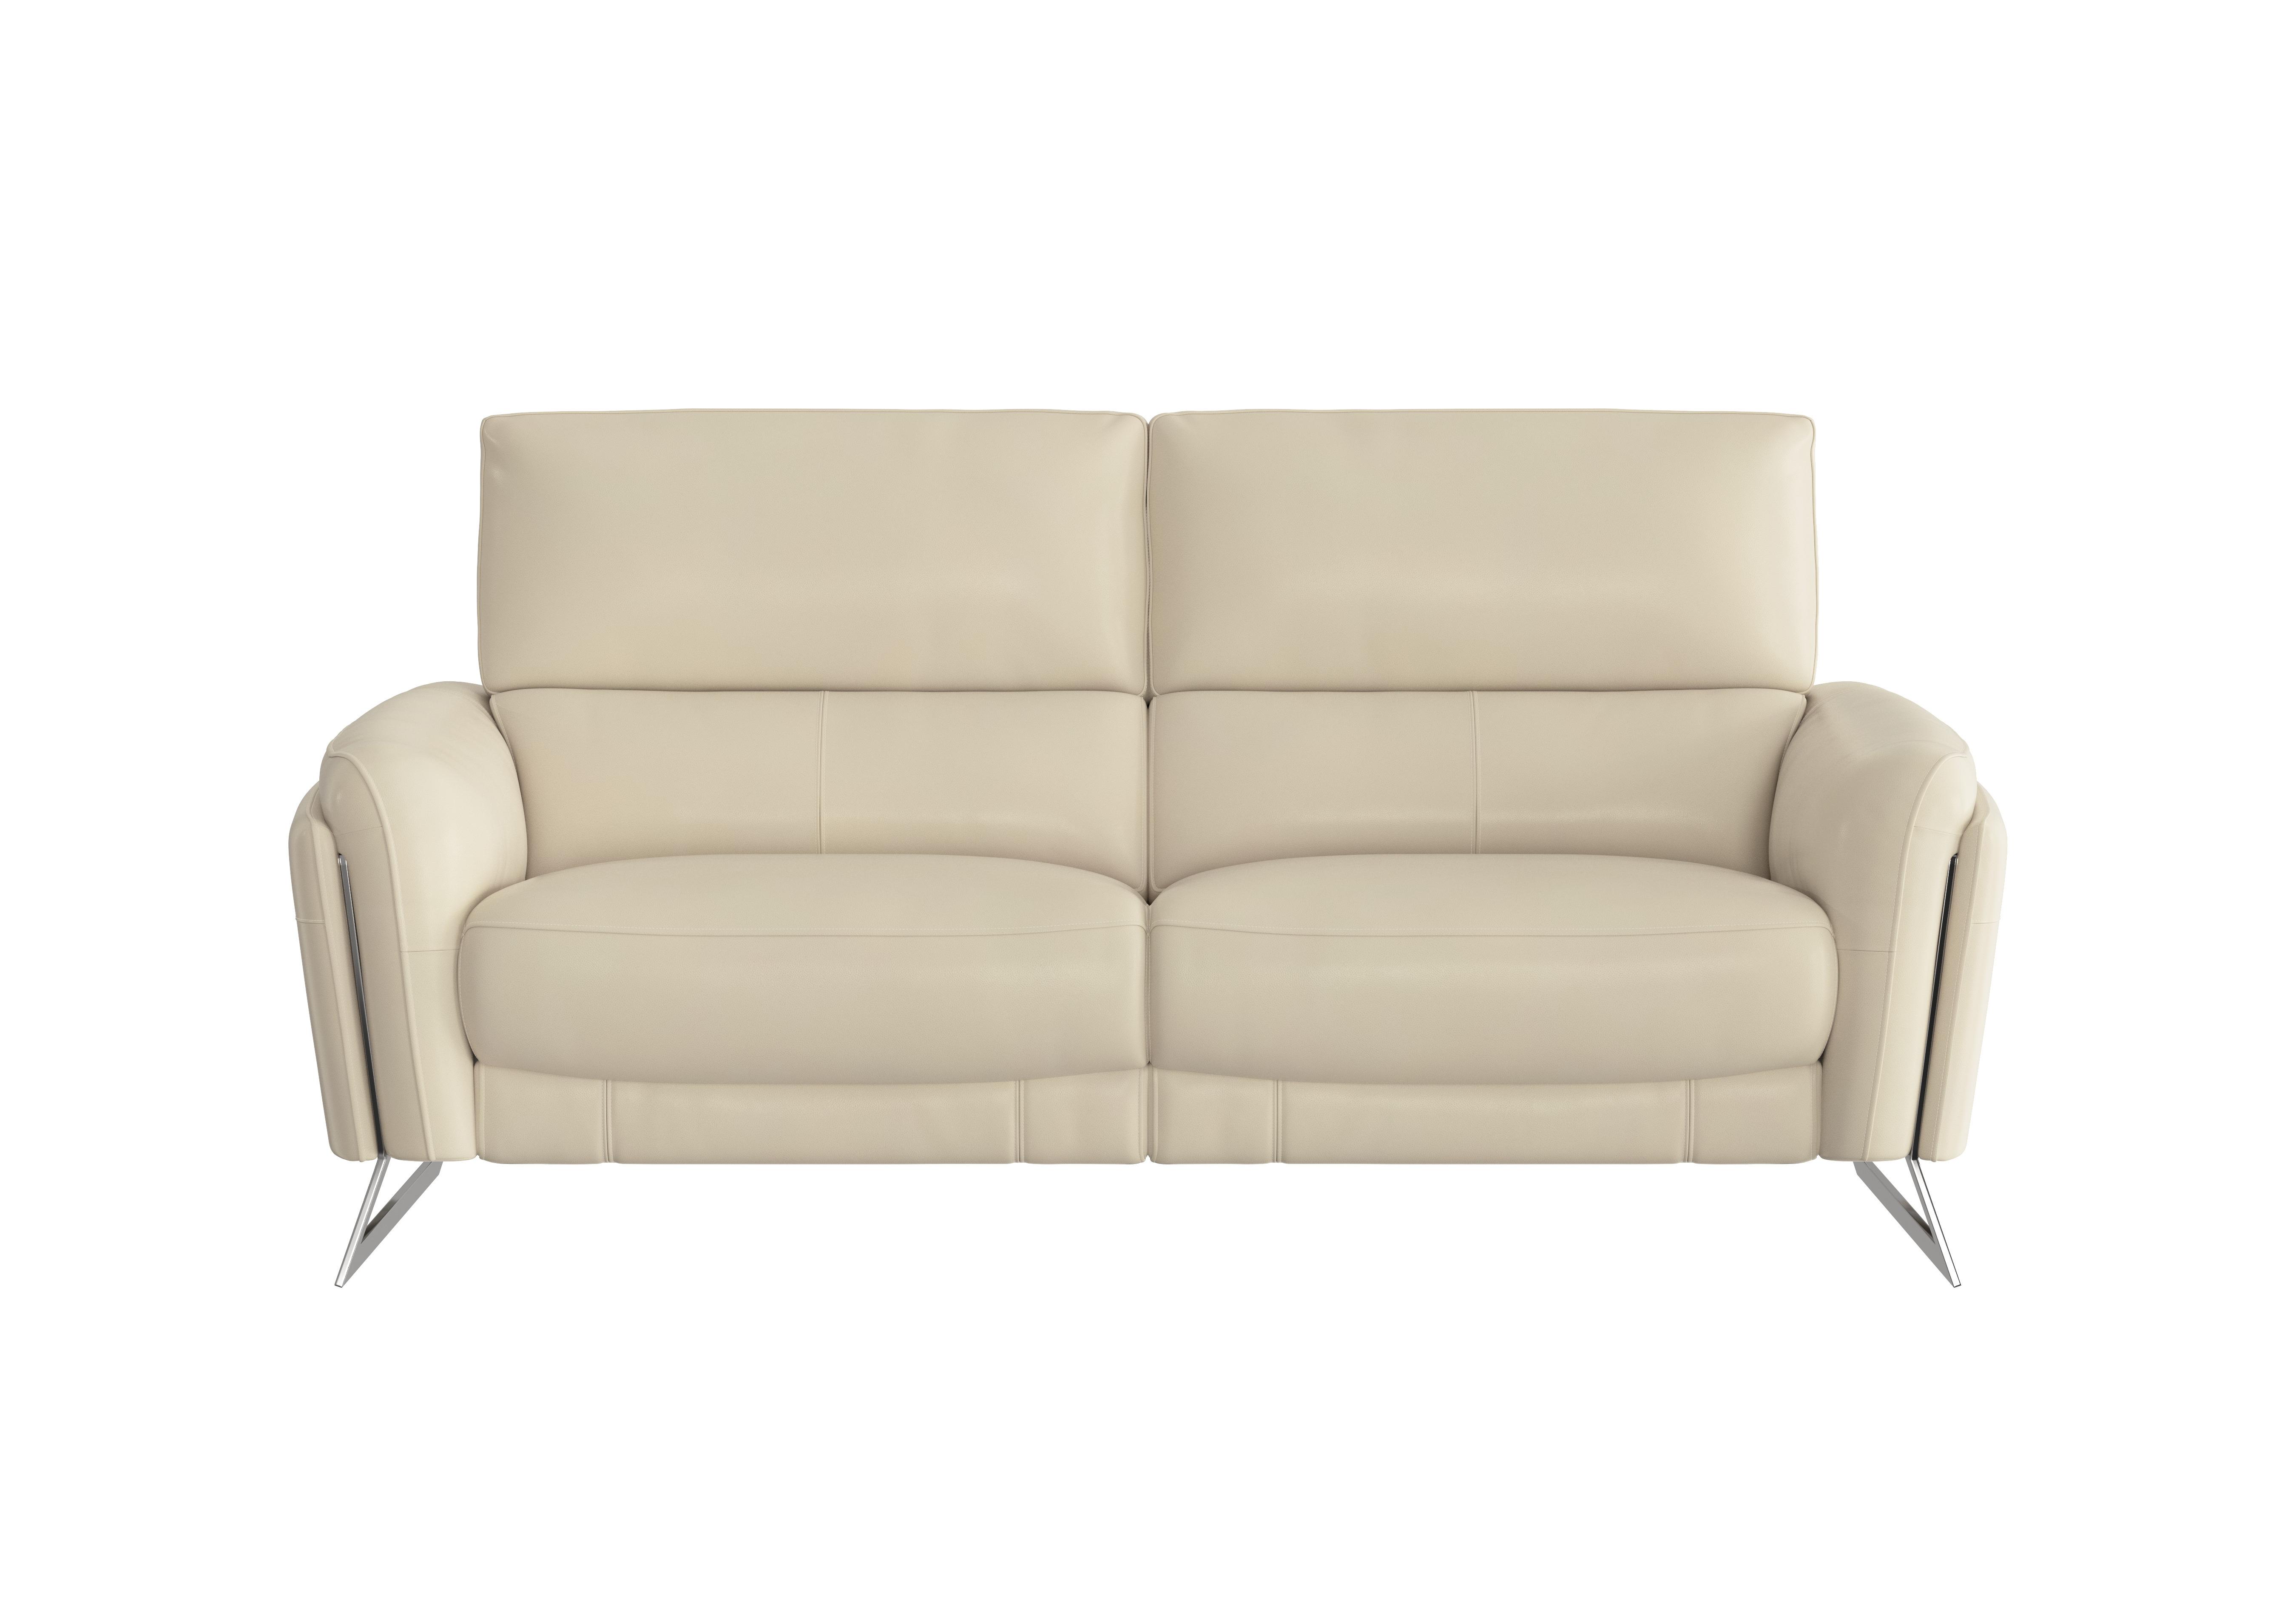 Amarilla 3 Seater Leather Sofa in Bv-862c Bisque on Furniture Village